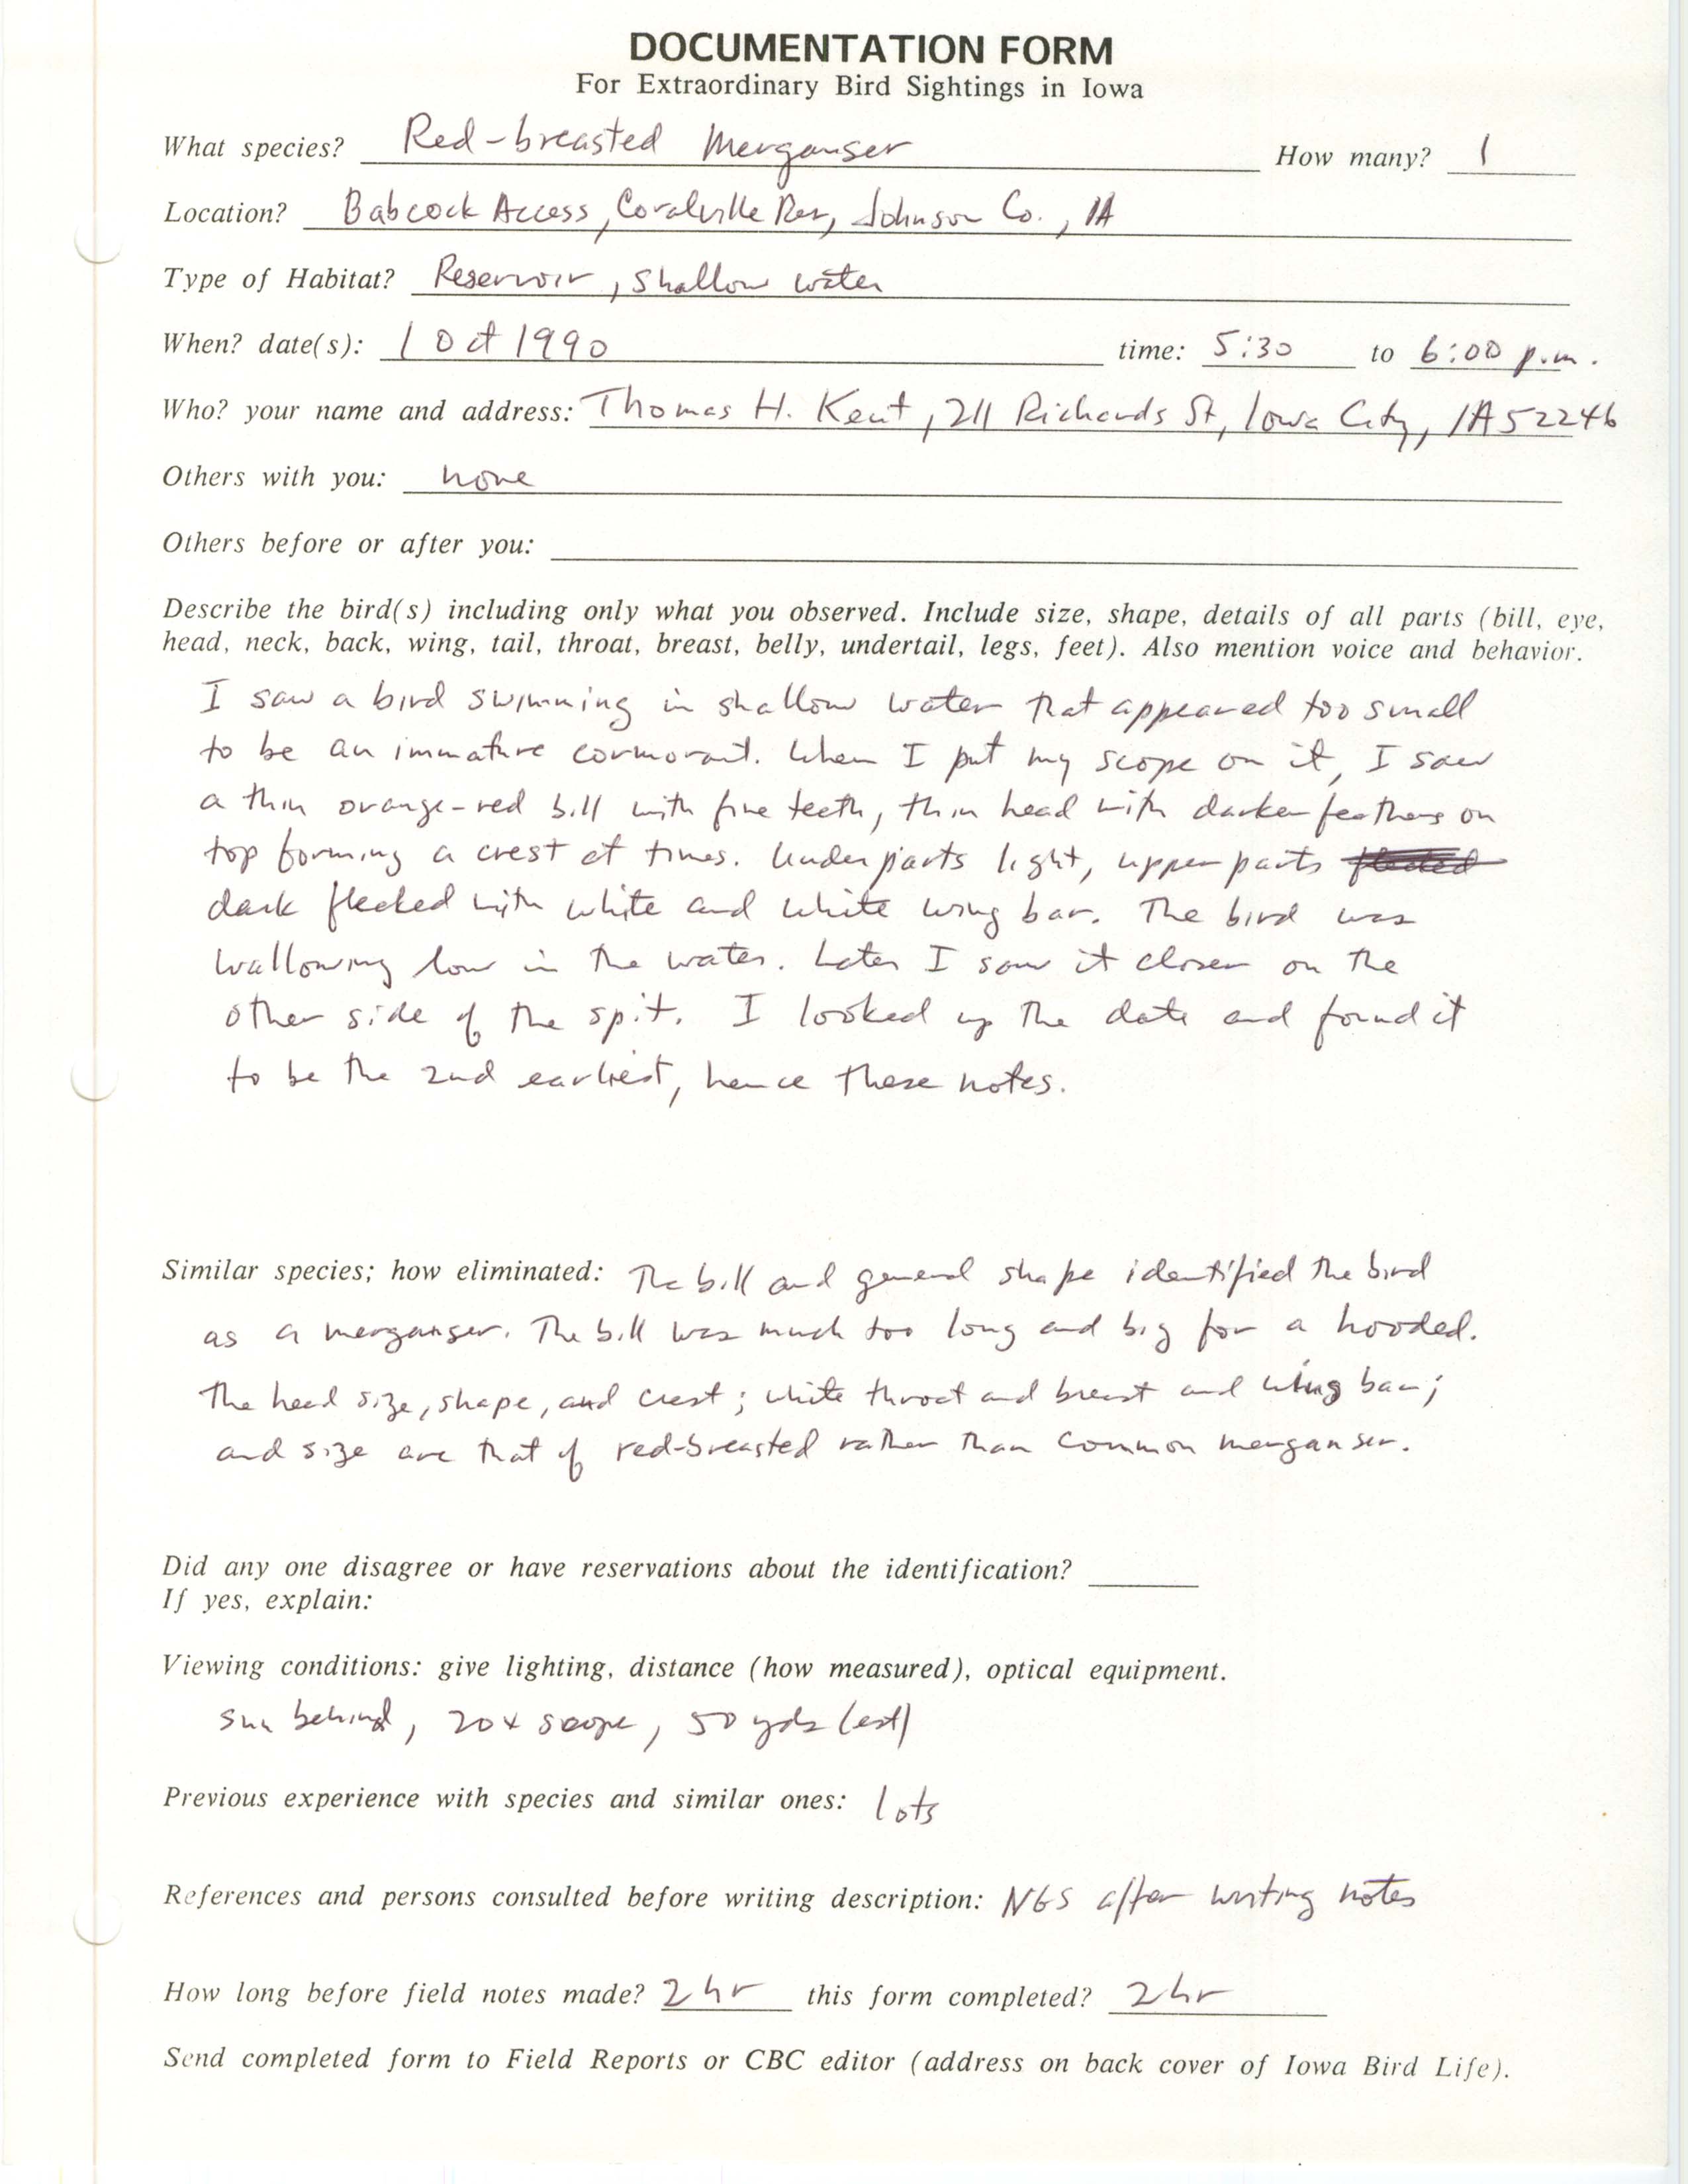 Rare bird documentation form for Red-breasted Merganser at Coralville Reservoir, 1990